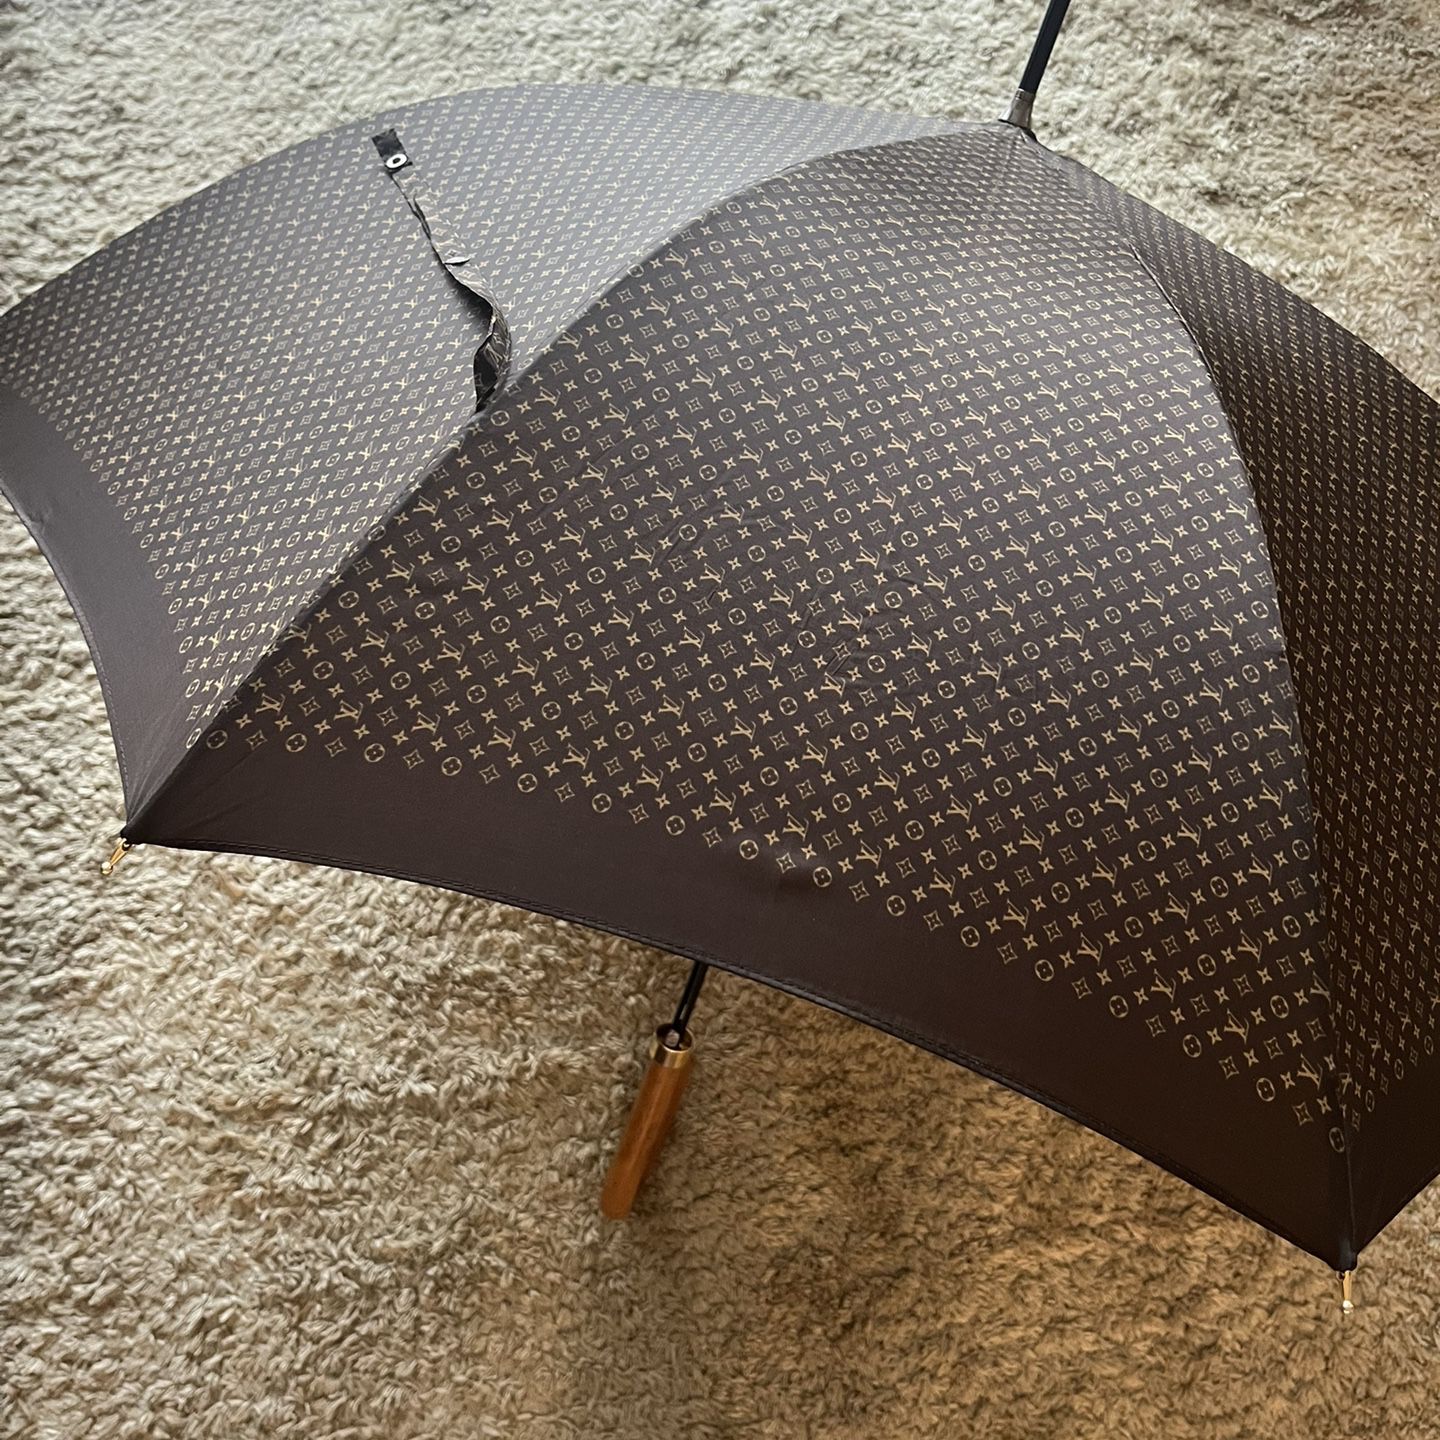 Umbrella Louis Vuitton Brown in Other - 4273533